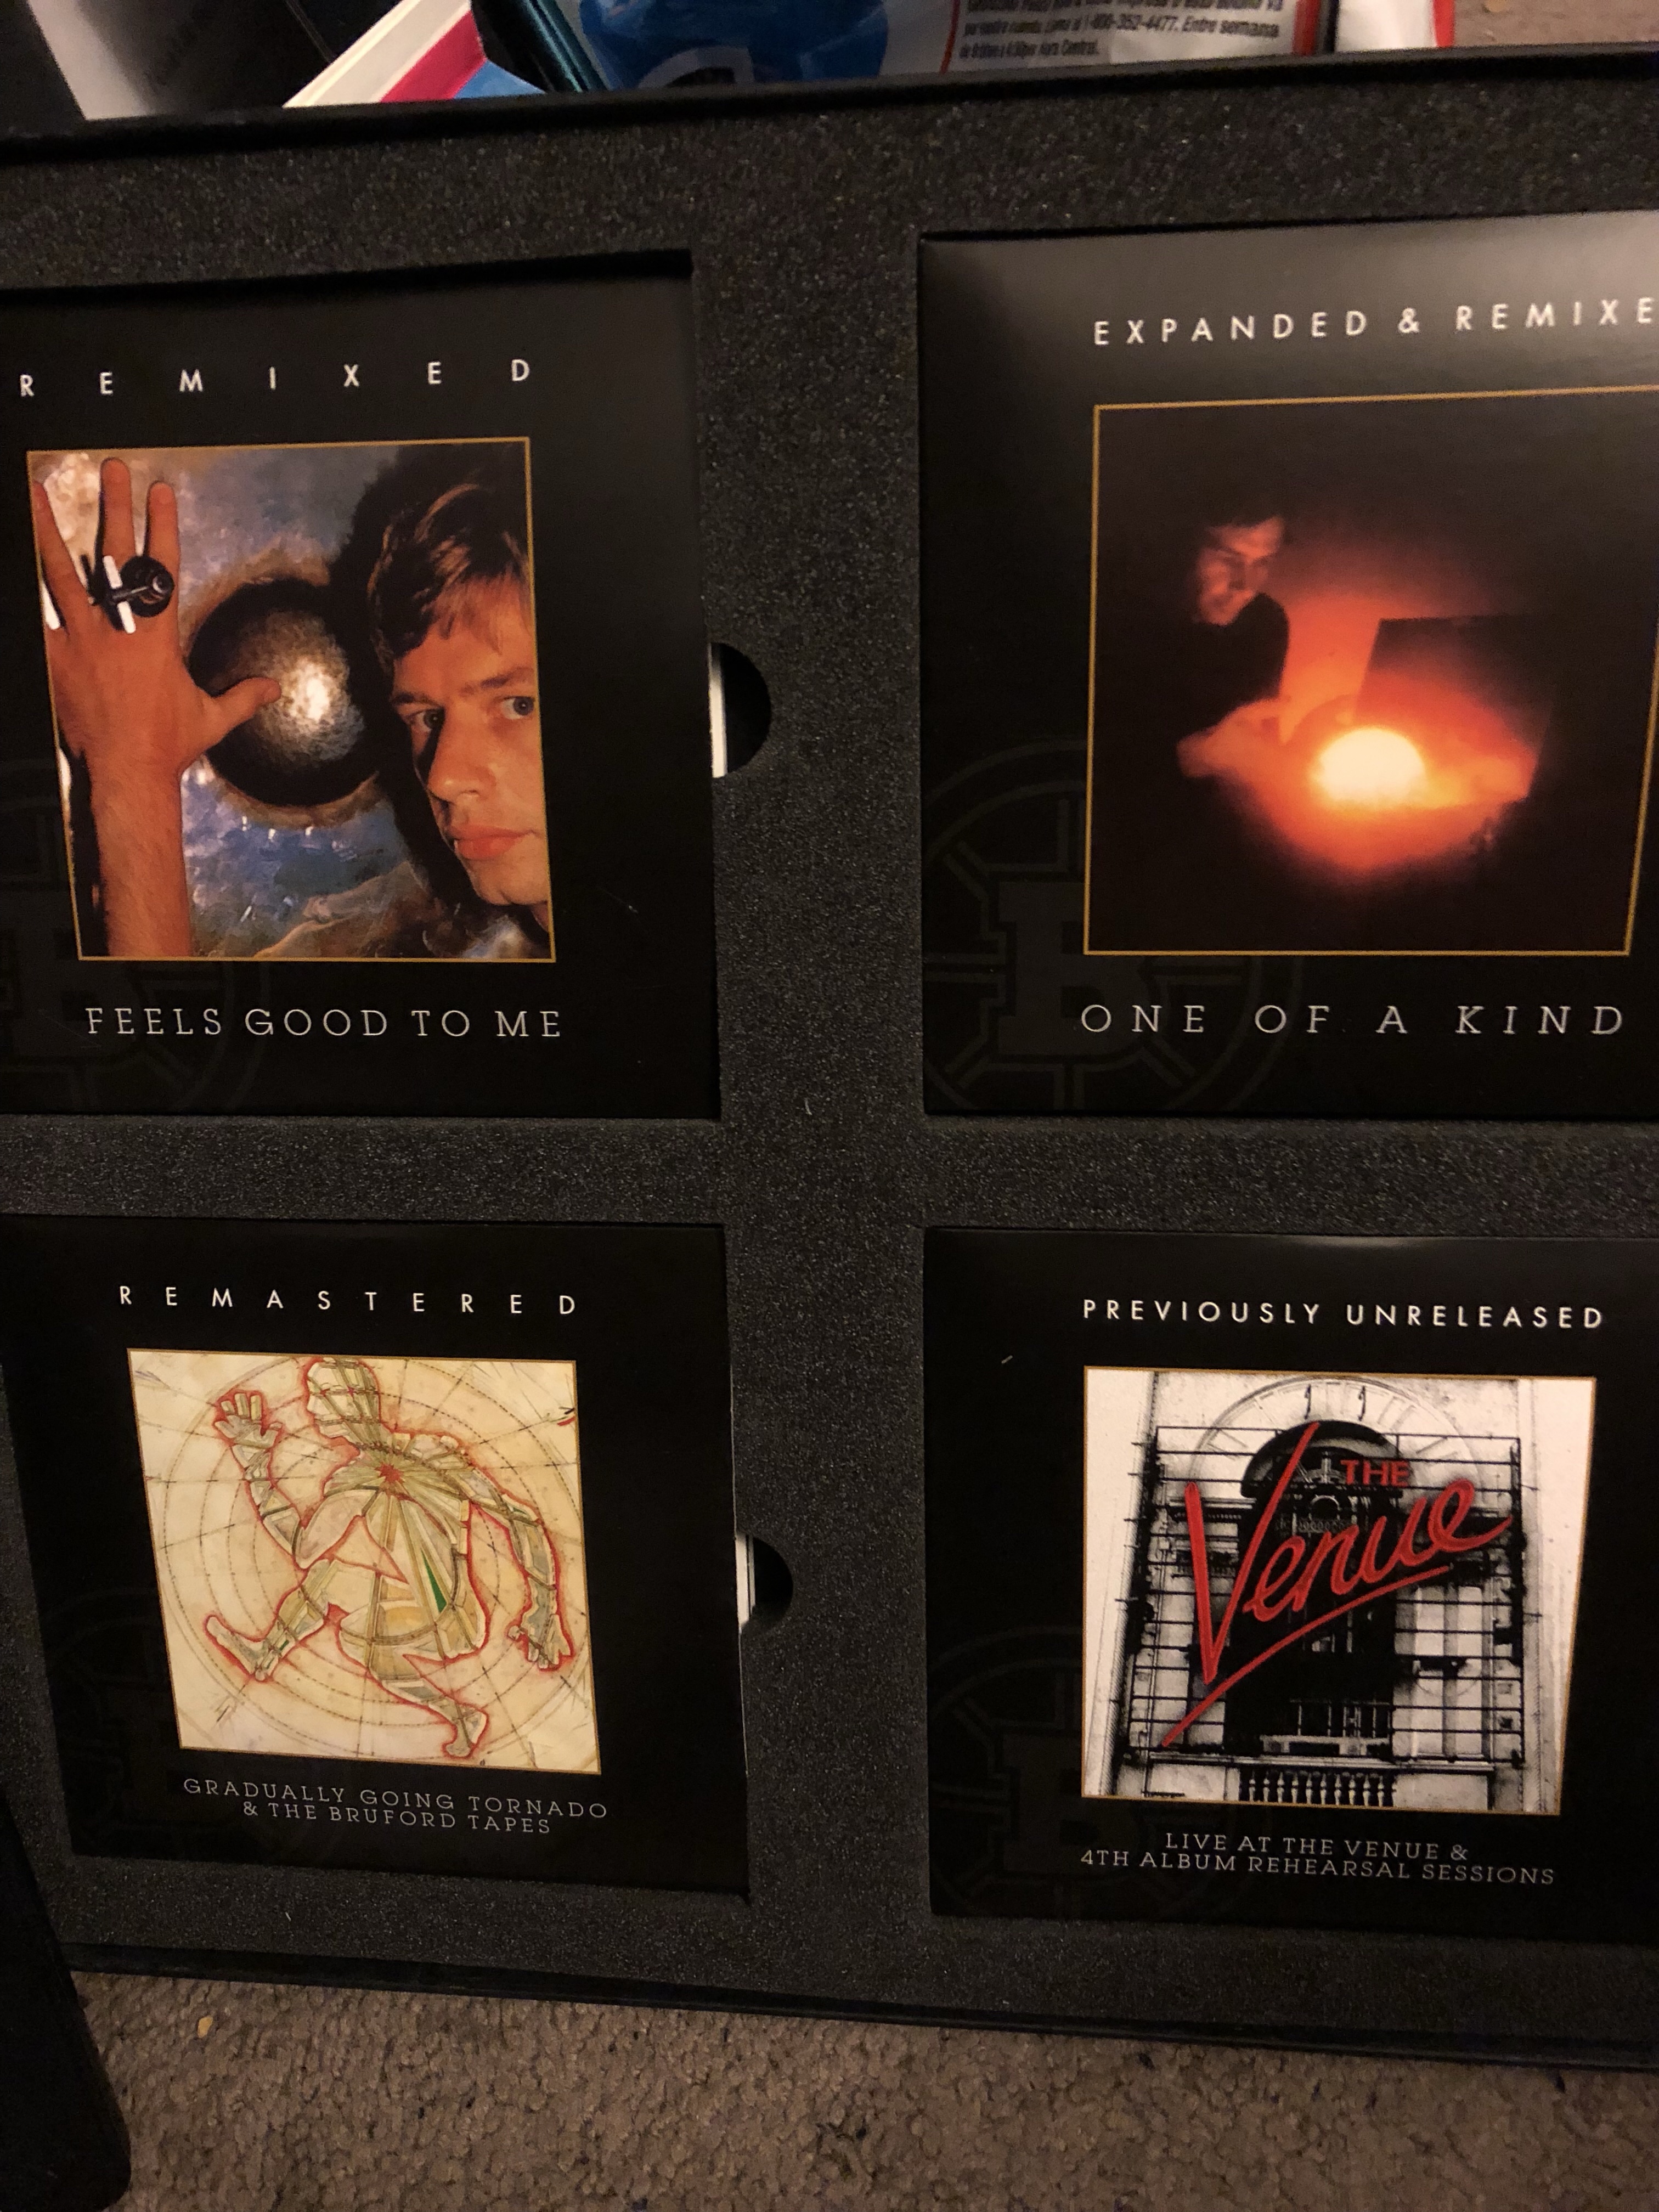 Album Review: “Bruford, Seems Like A Lifetime Ago (1977-1980)” Box